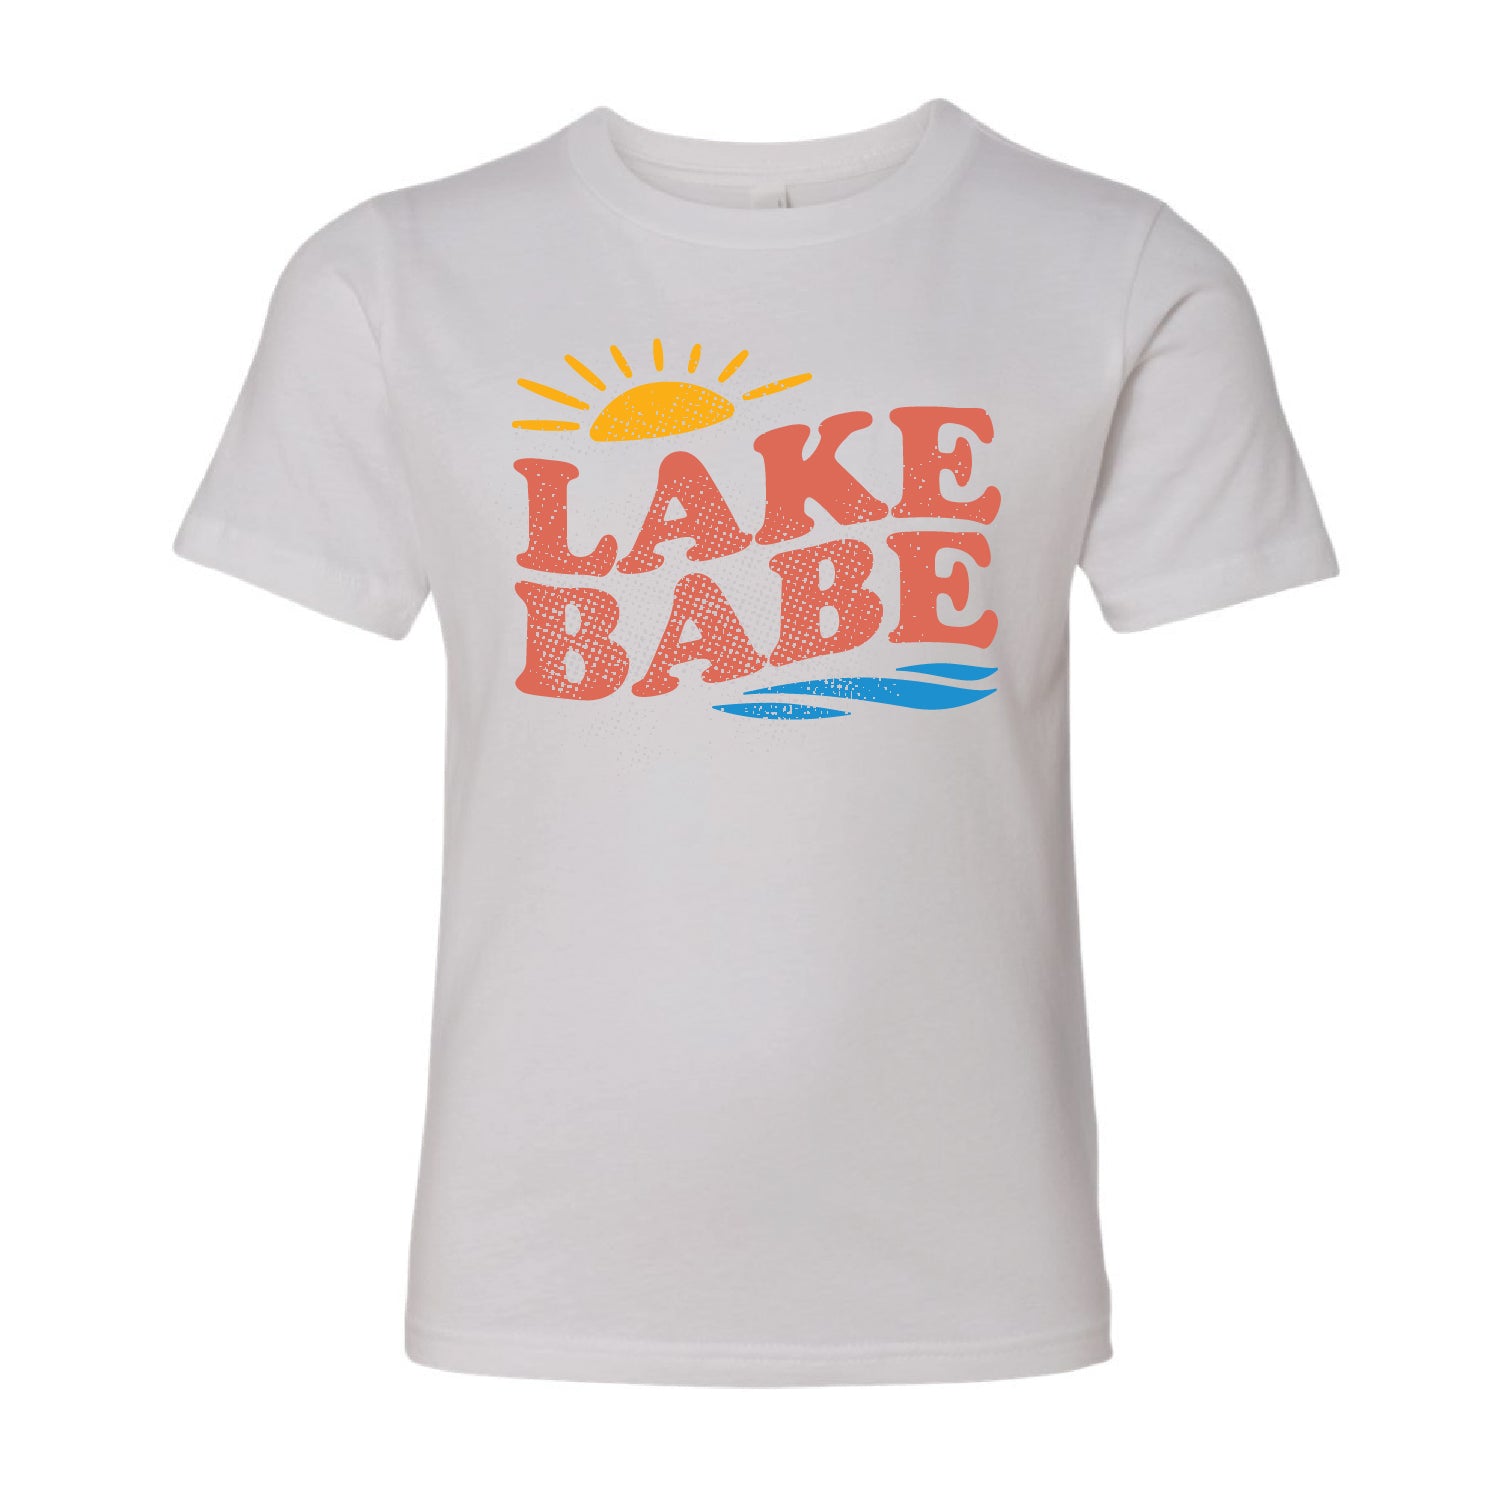 Lake Babe Youth Cotton T-Shirt